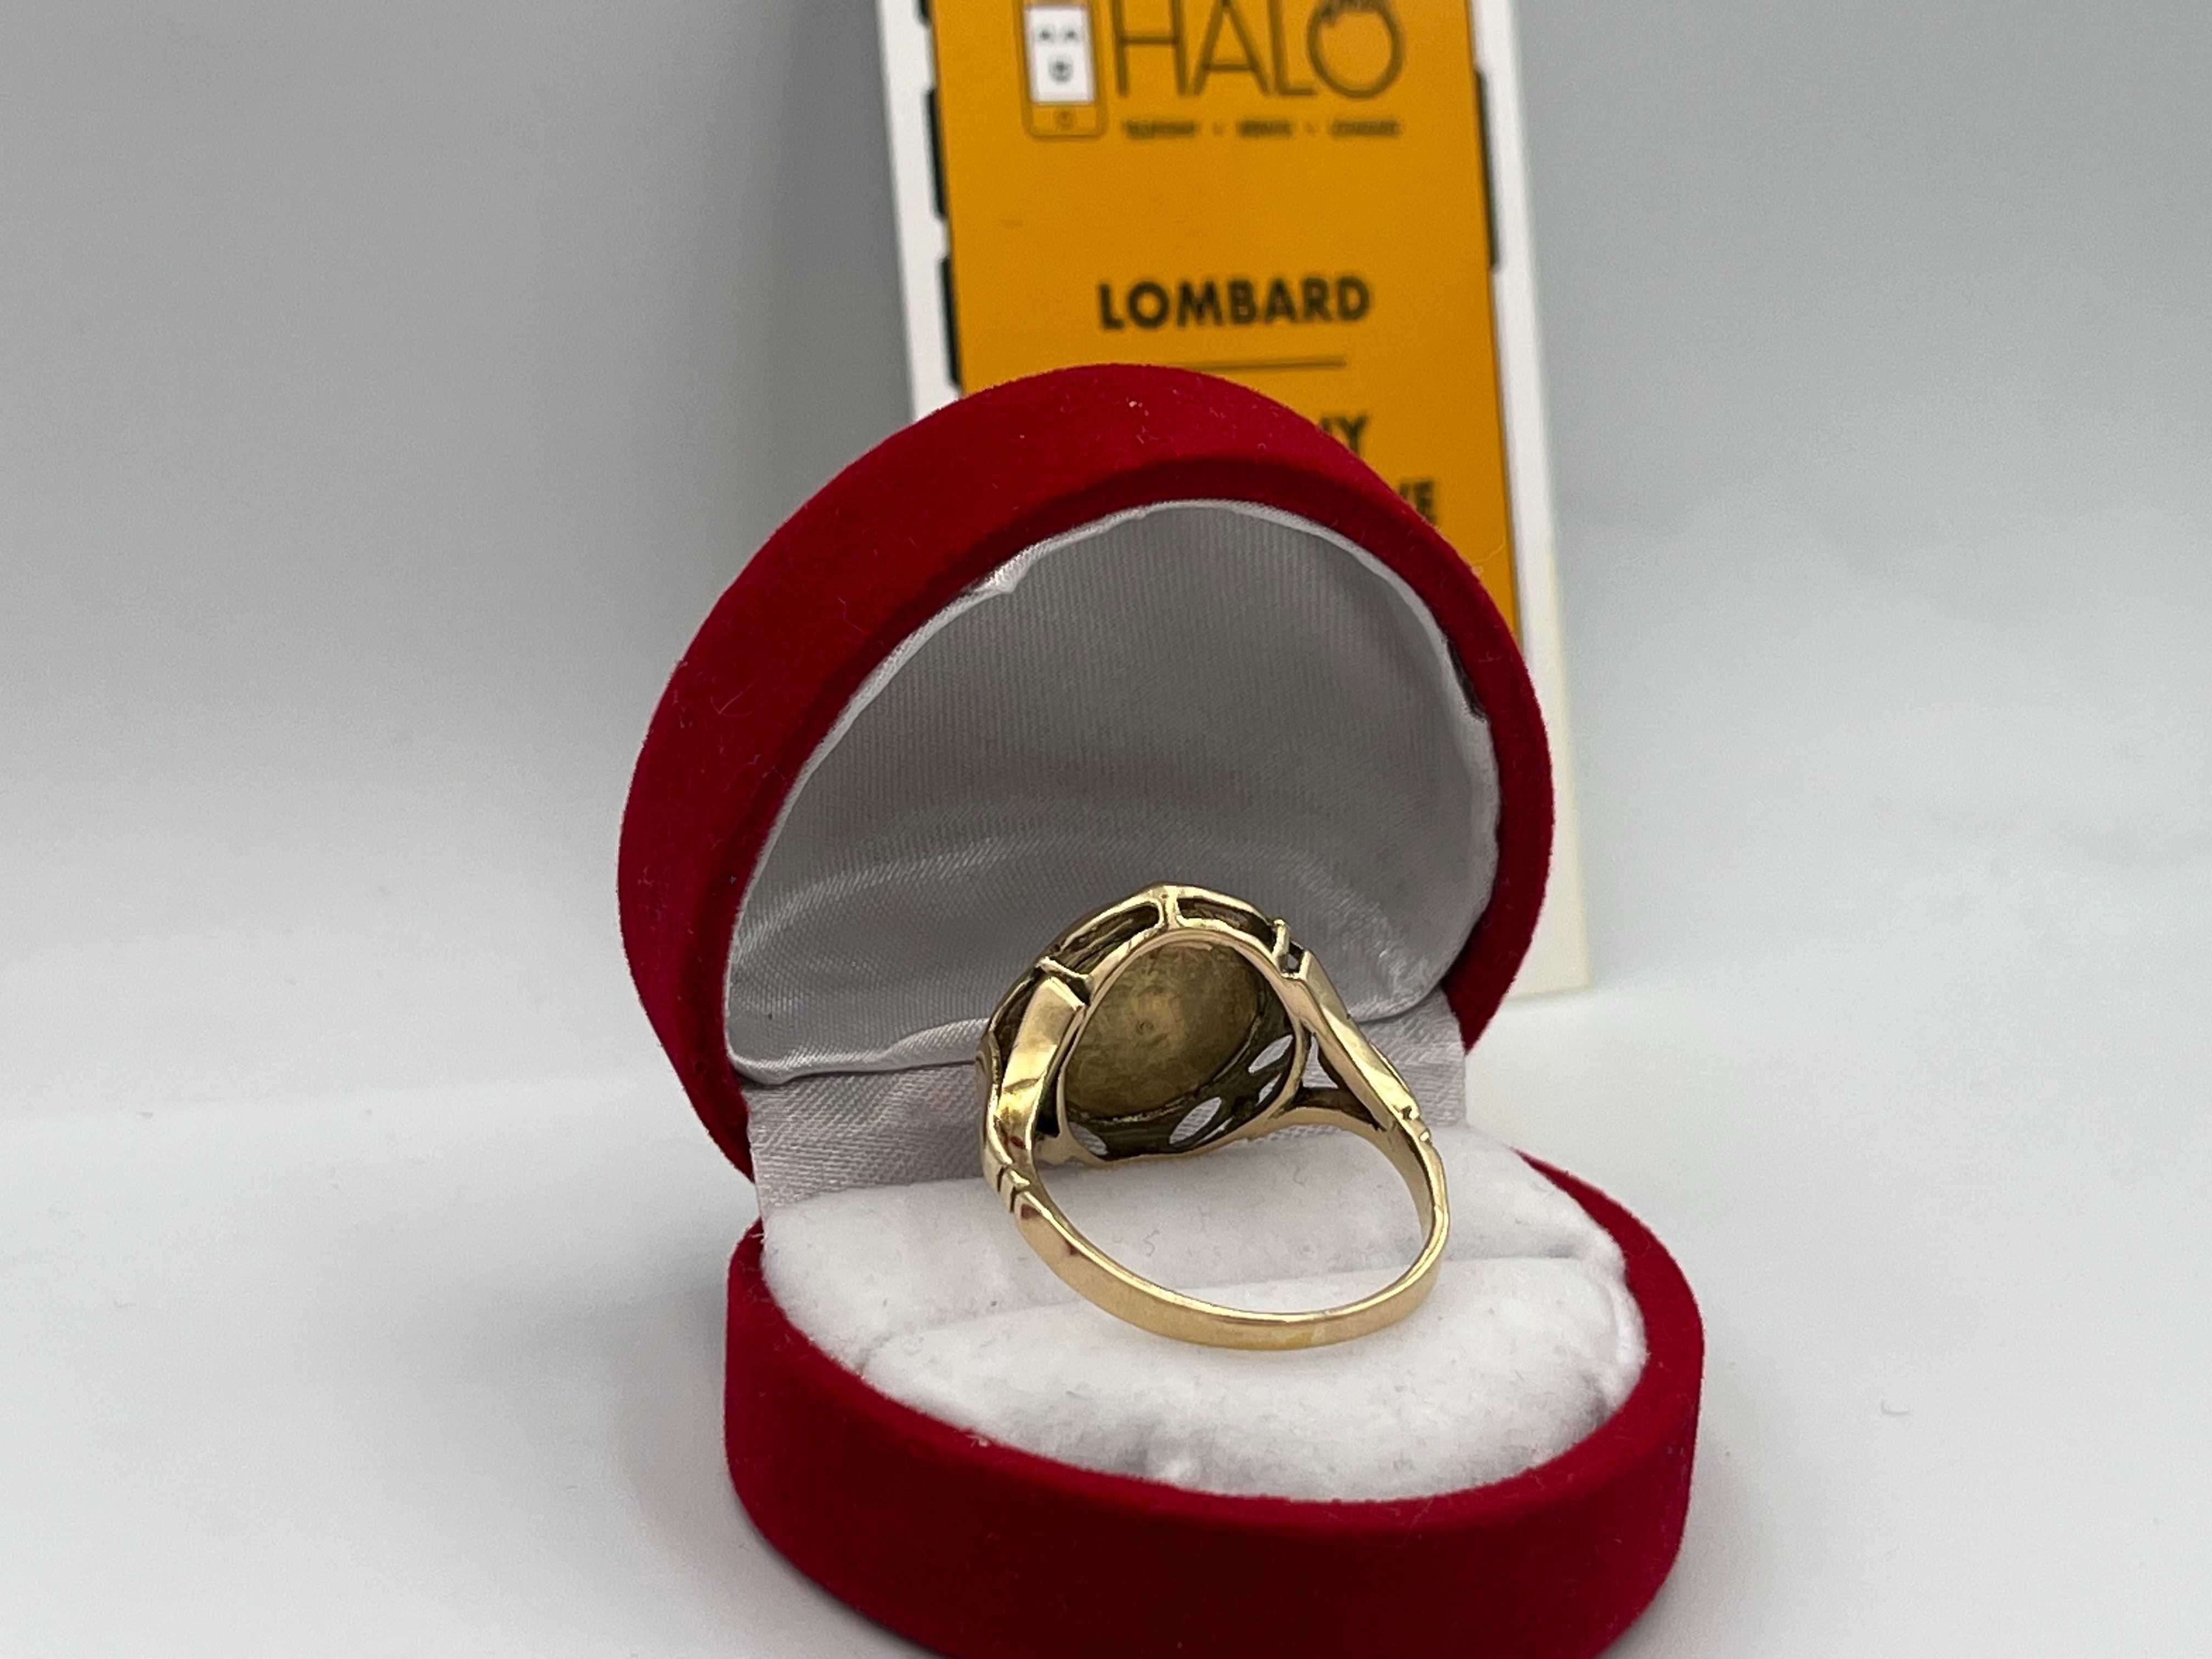 Złoty pierścionek 14K z koralem, Lombard Halo gsm Łódź